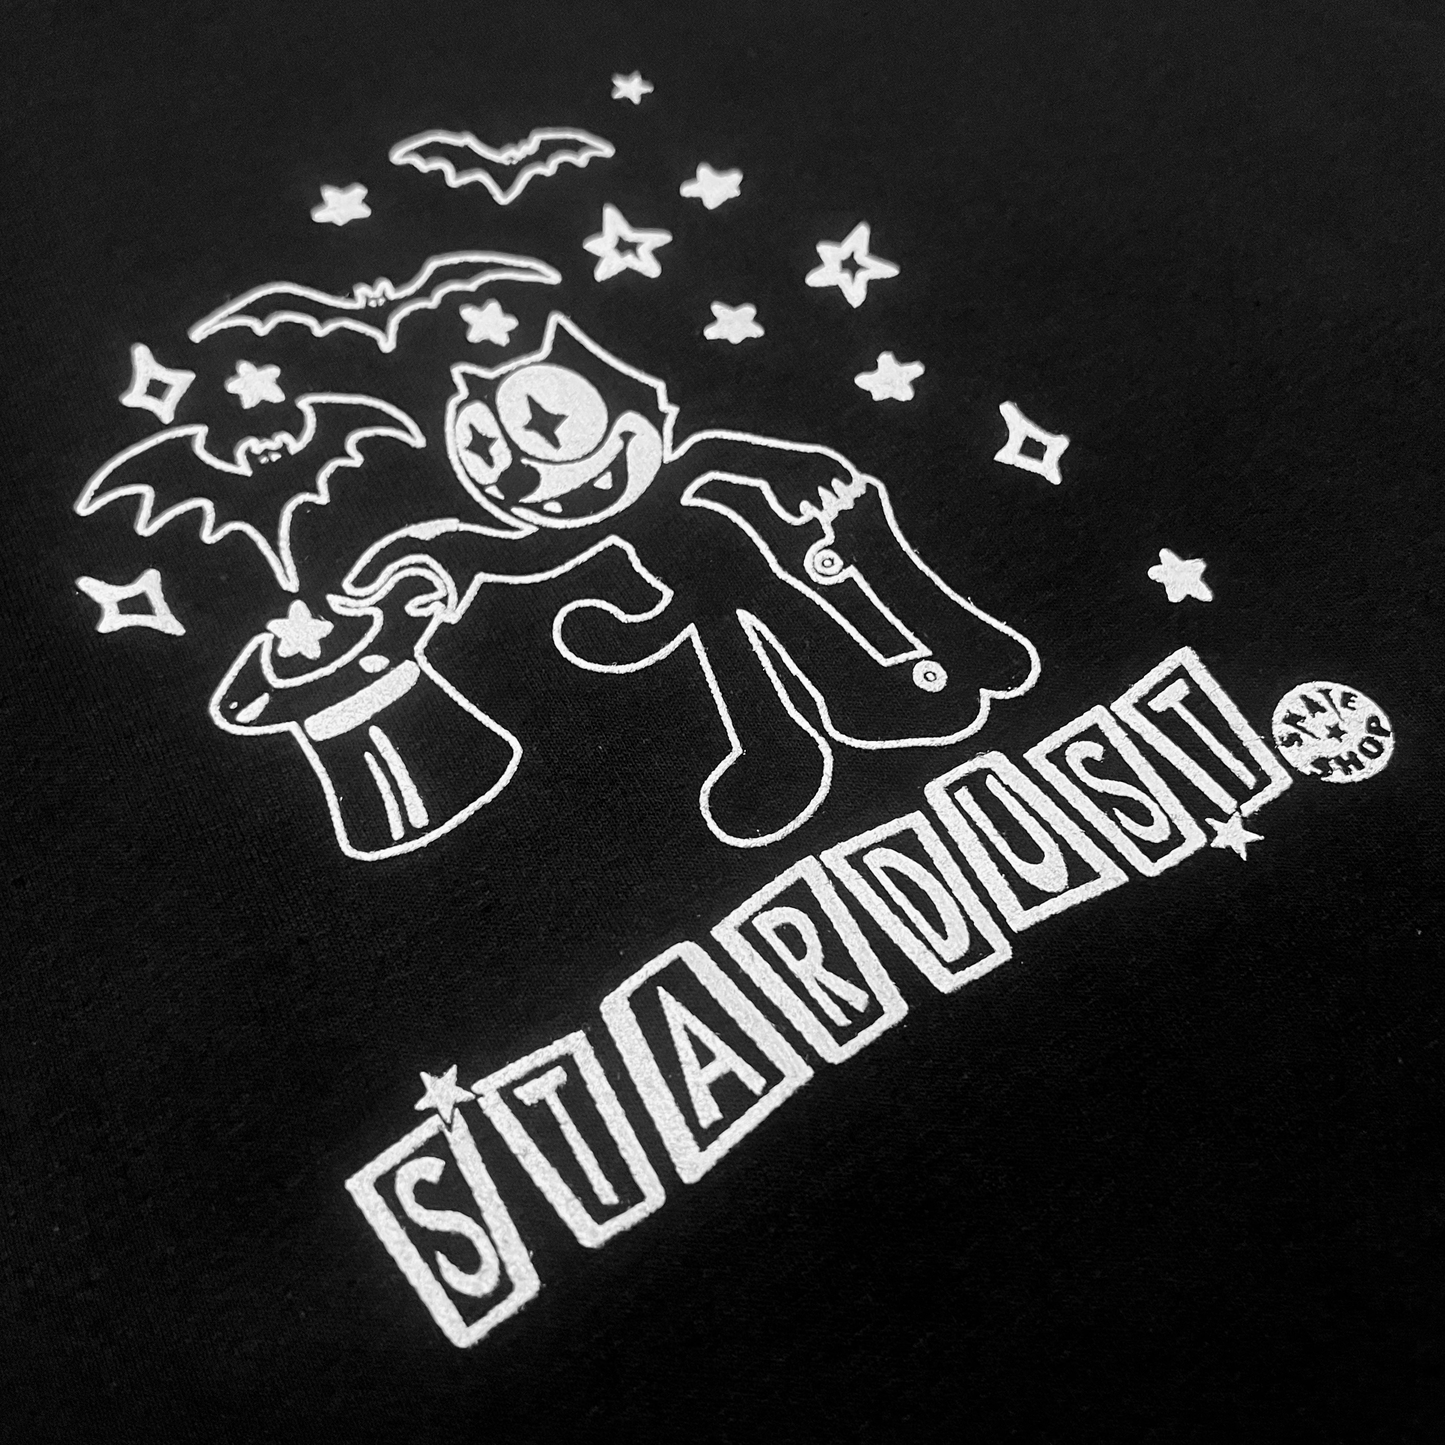 Stardust Skate Shop Felix 02 Youth Tee 024 Black / White